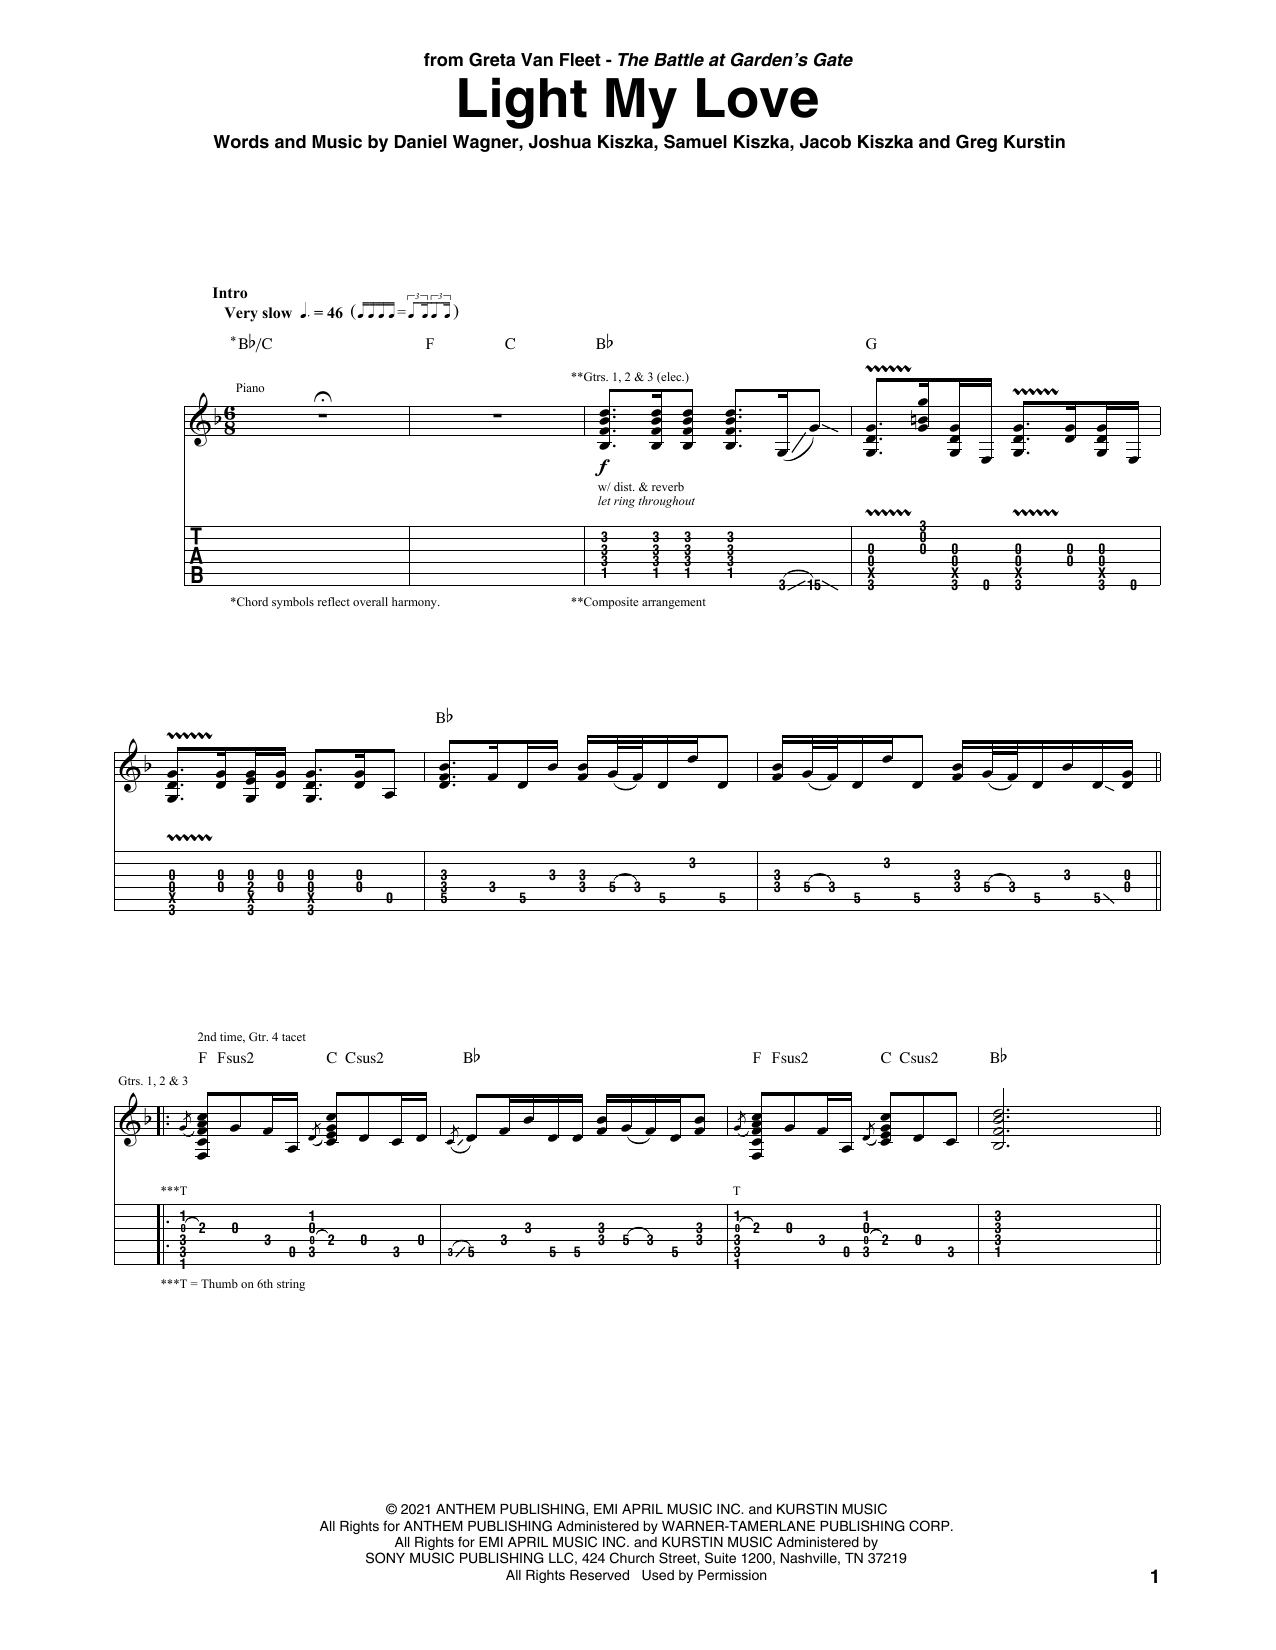 Greta Van Fleet Light My Love Sheet Music Notes & Chords for Guitar Tab - Download or Print PDF